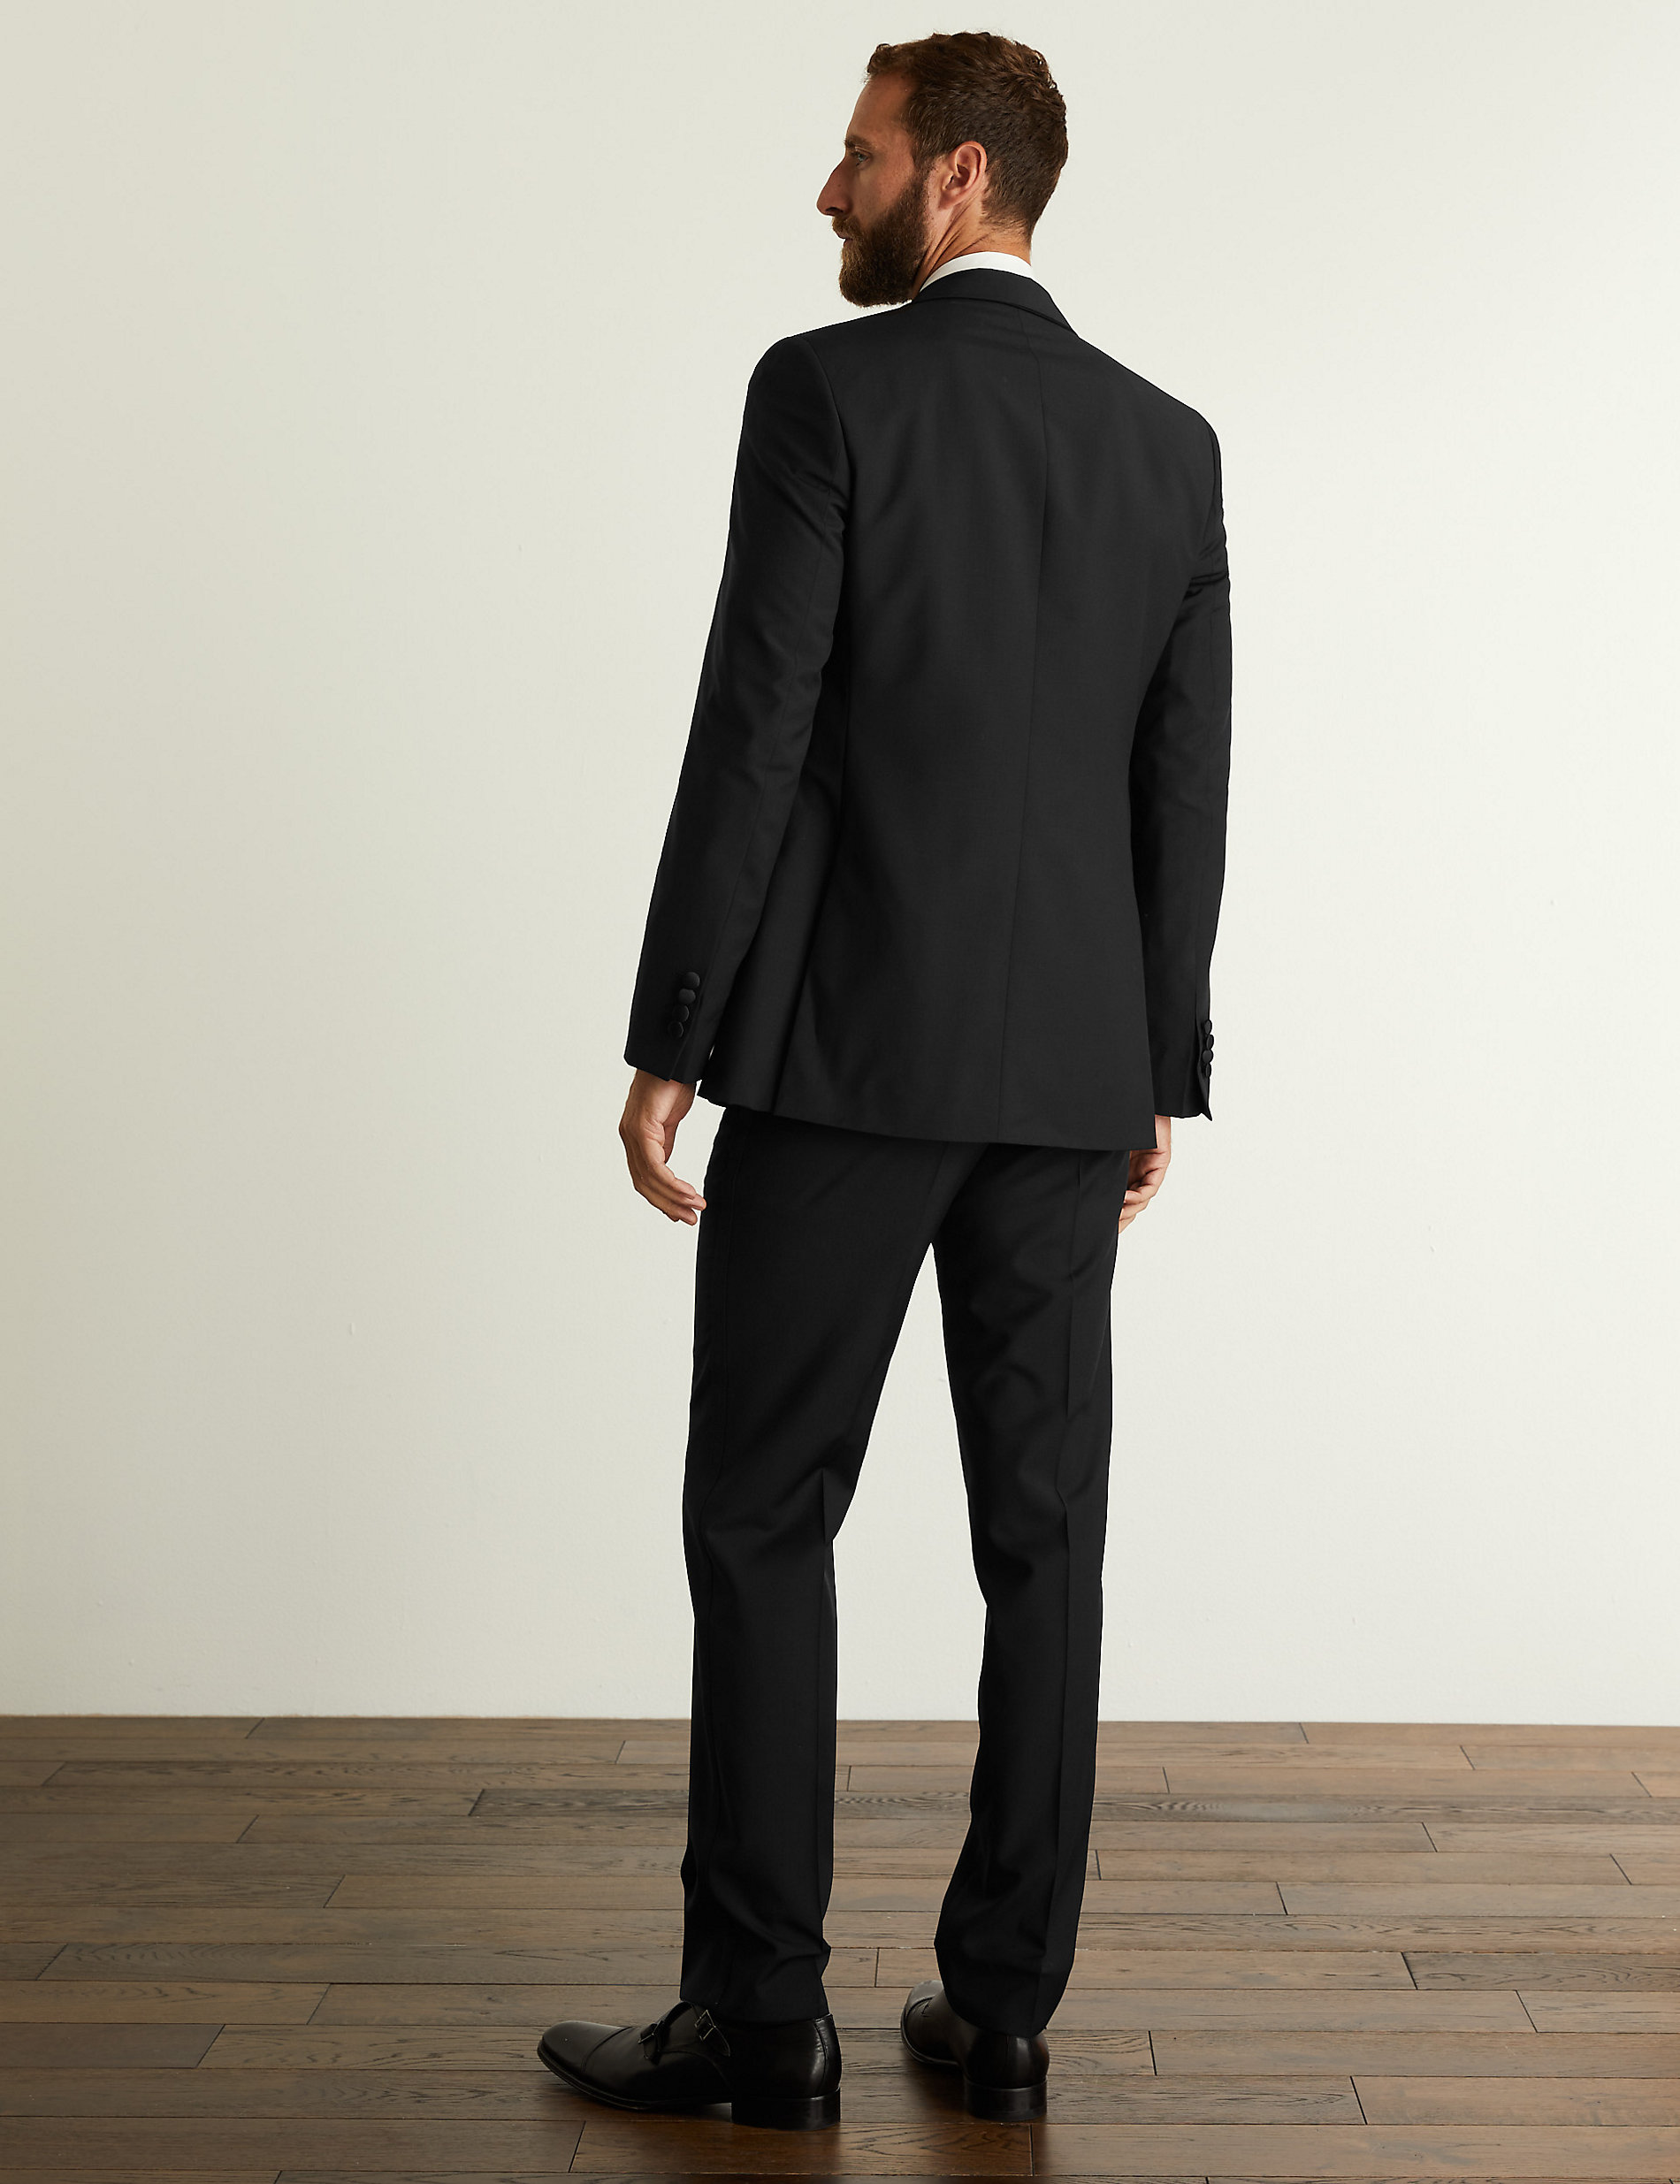 Tailored Fit Wool Tuxedo Jacket